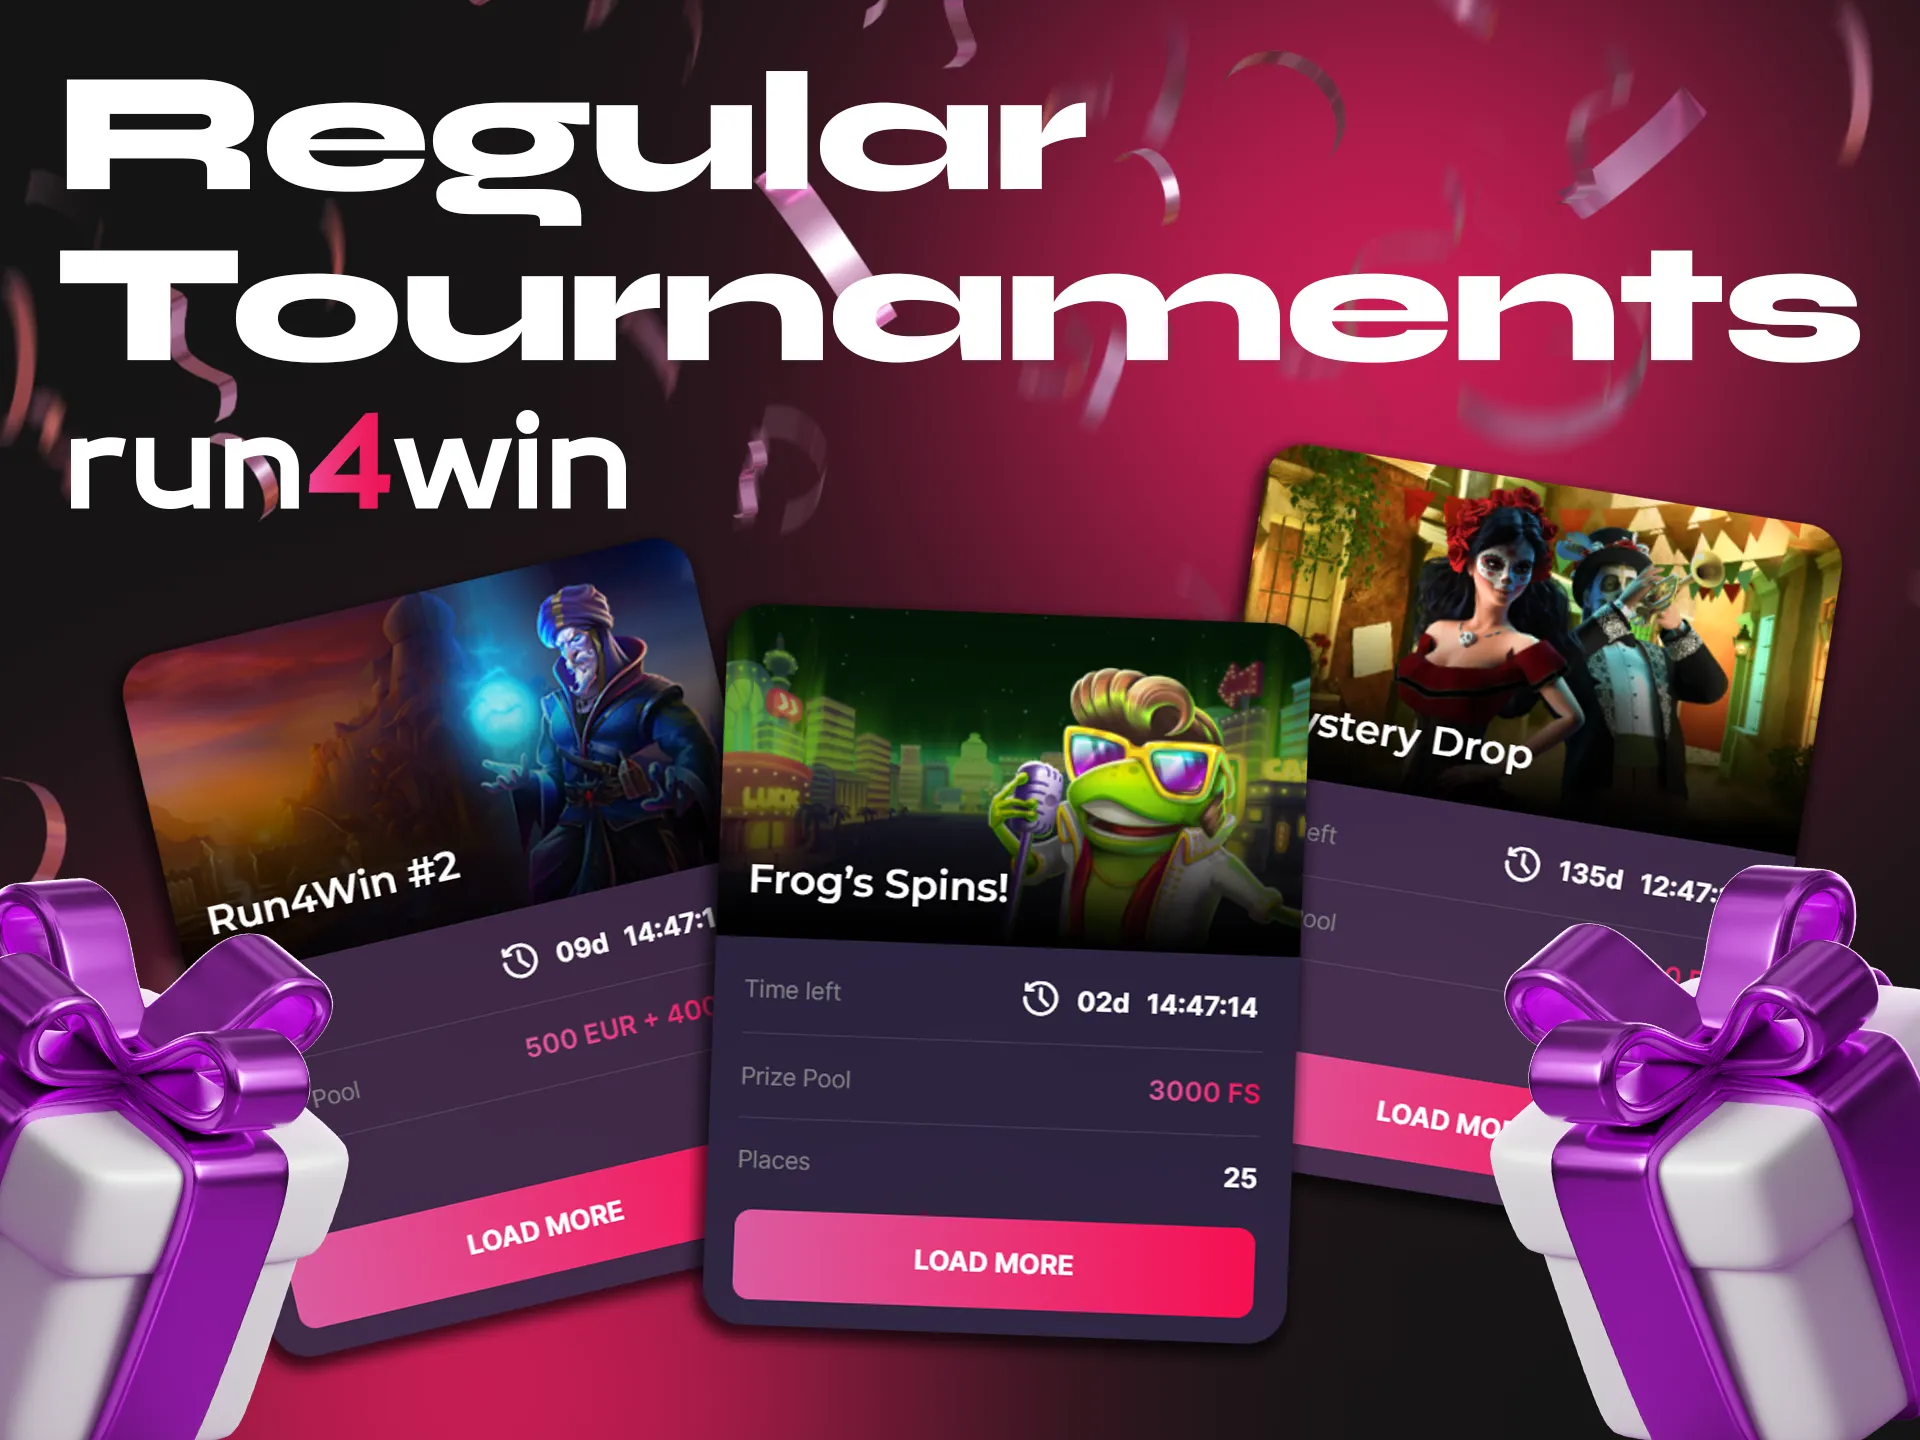 Take part in Run4Win's regular tournaments.